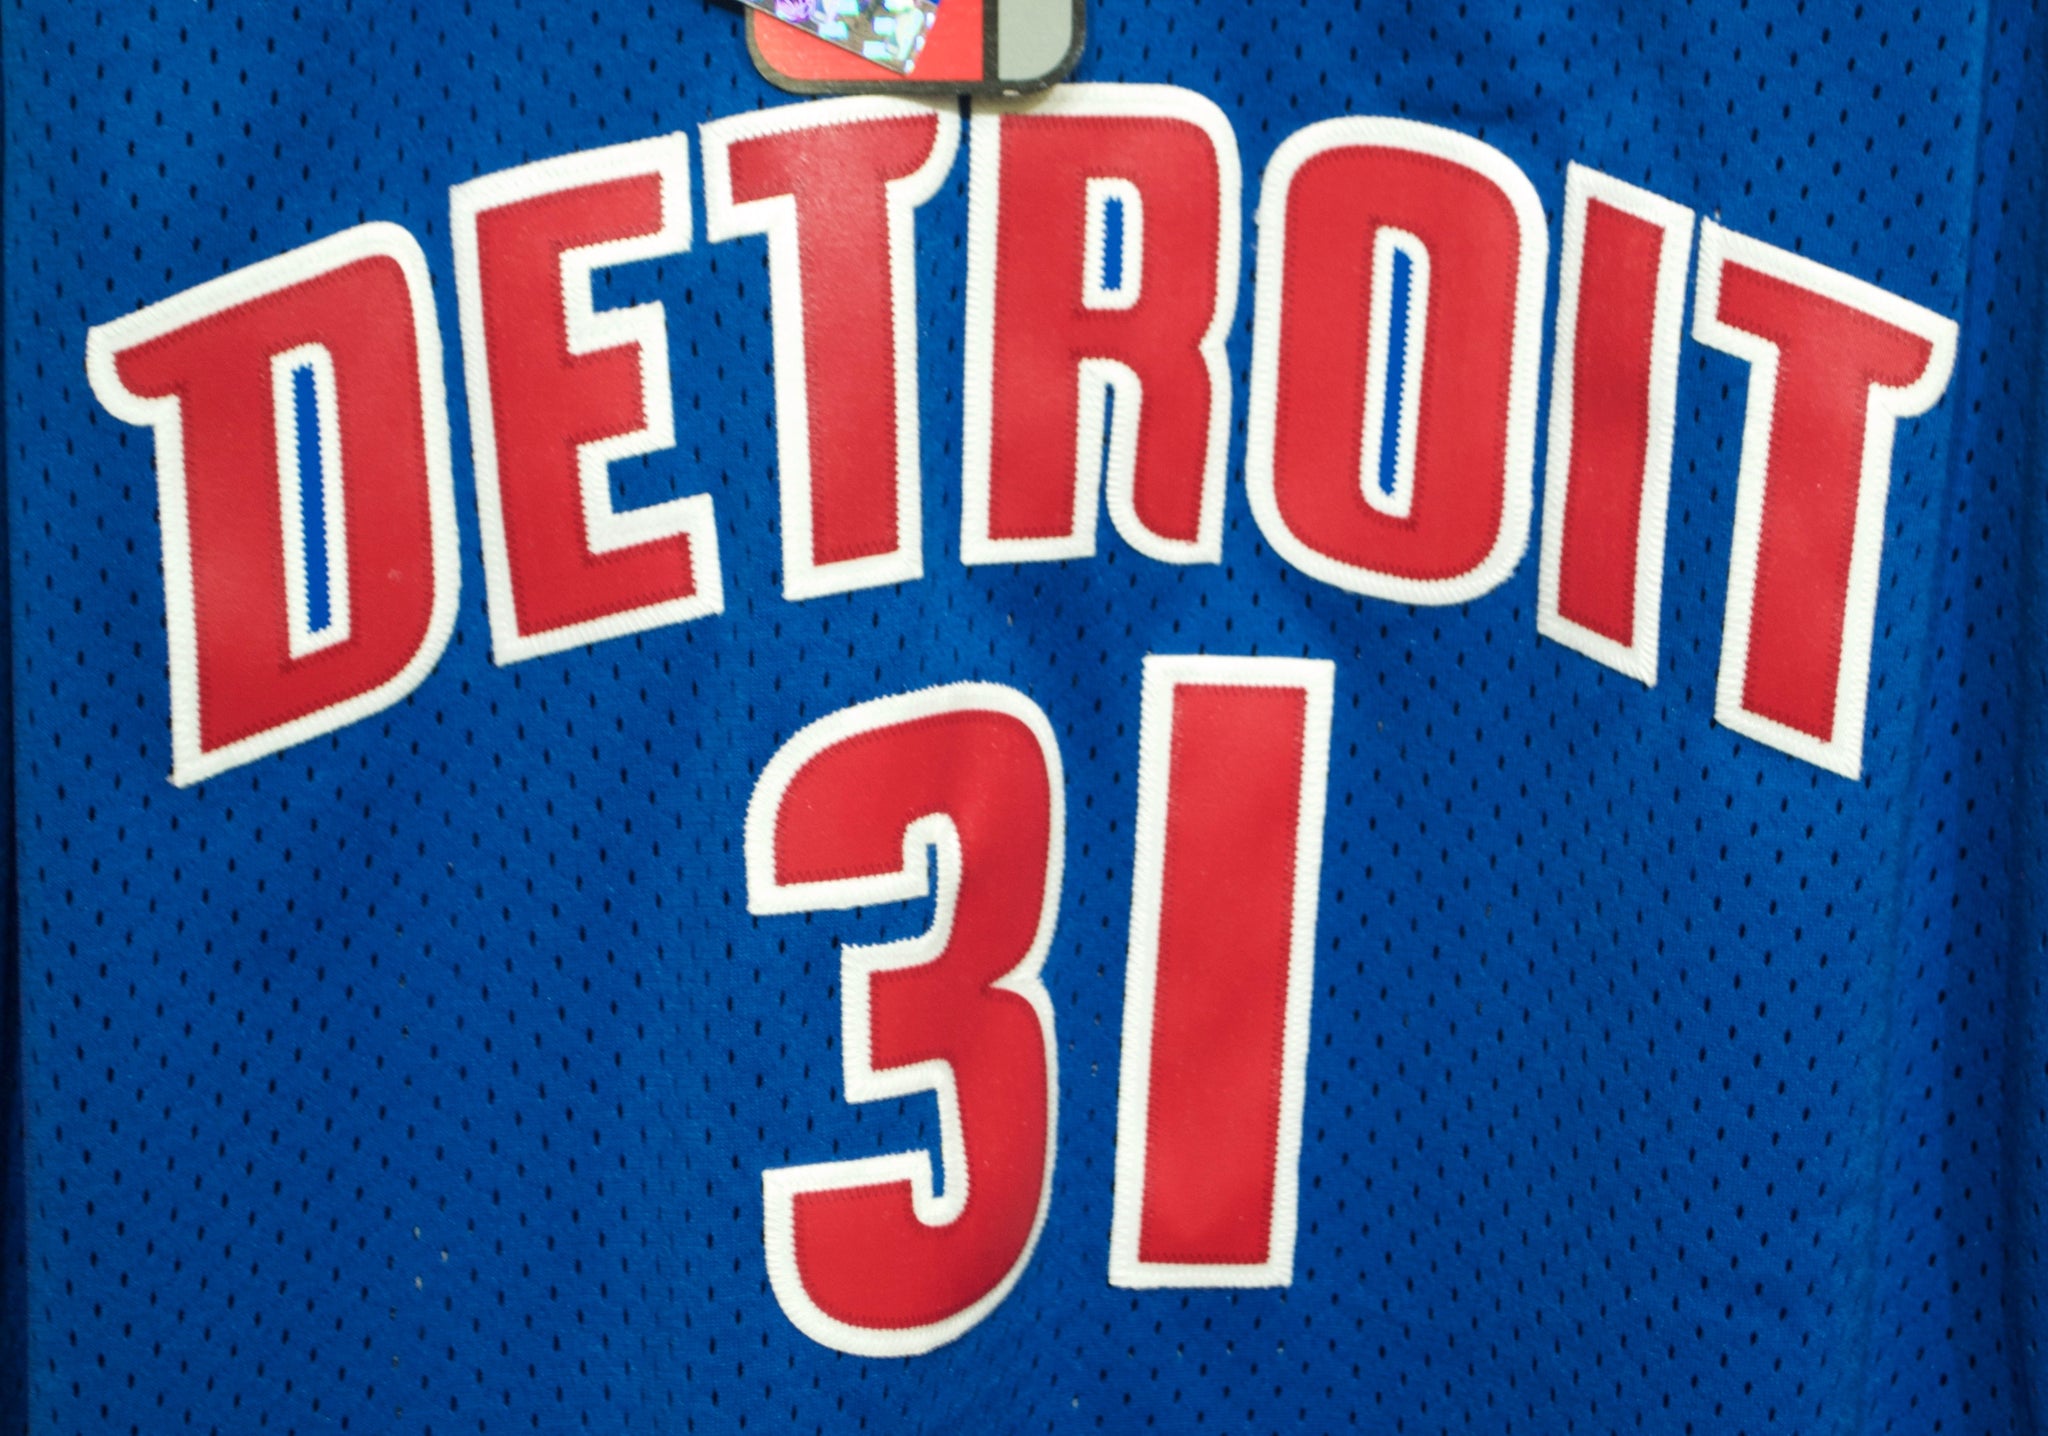 AUTHENTIC Darko Milicic Detroit Pistons Jersey Reebok Sz XL